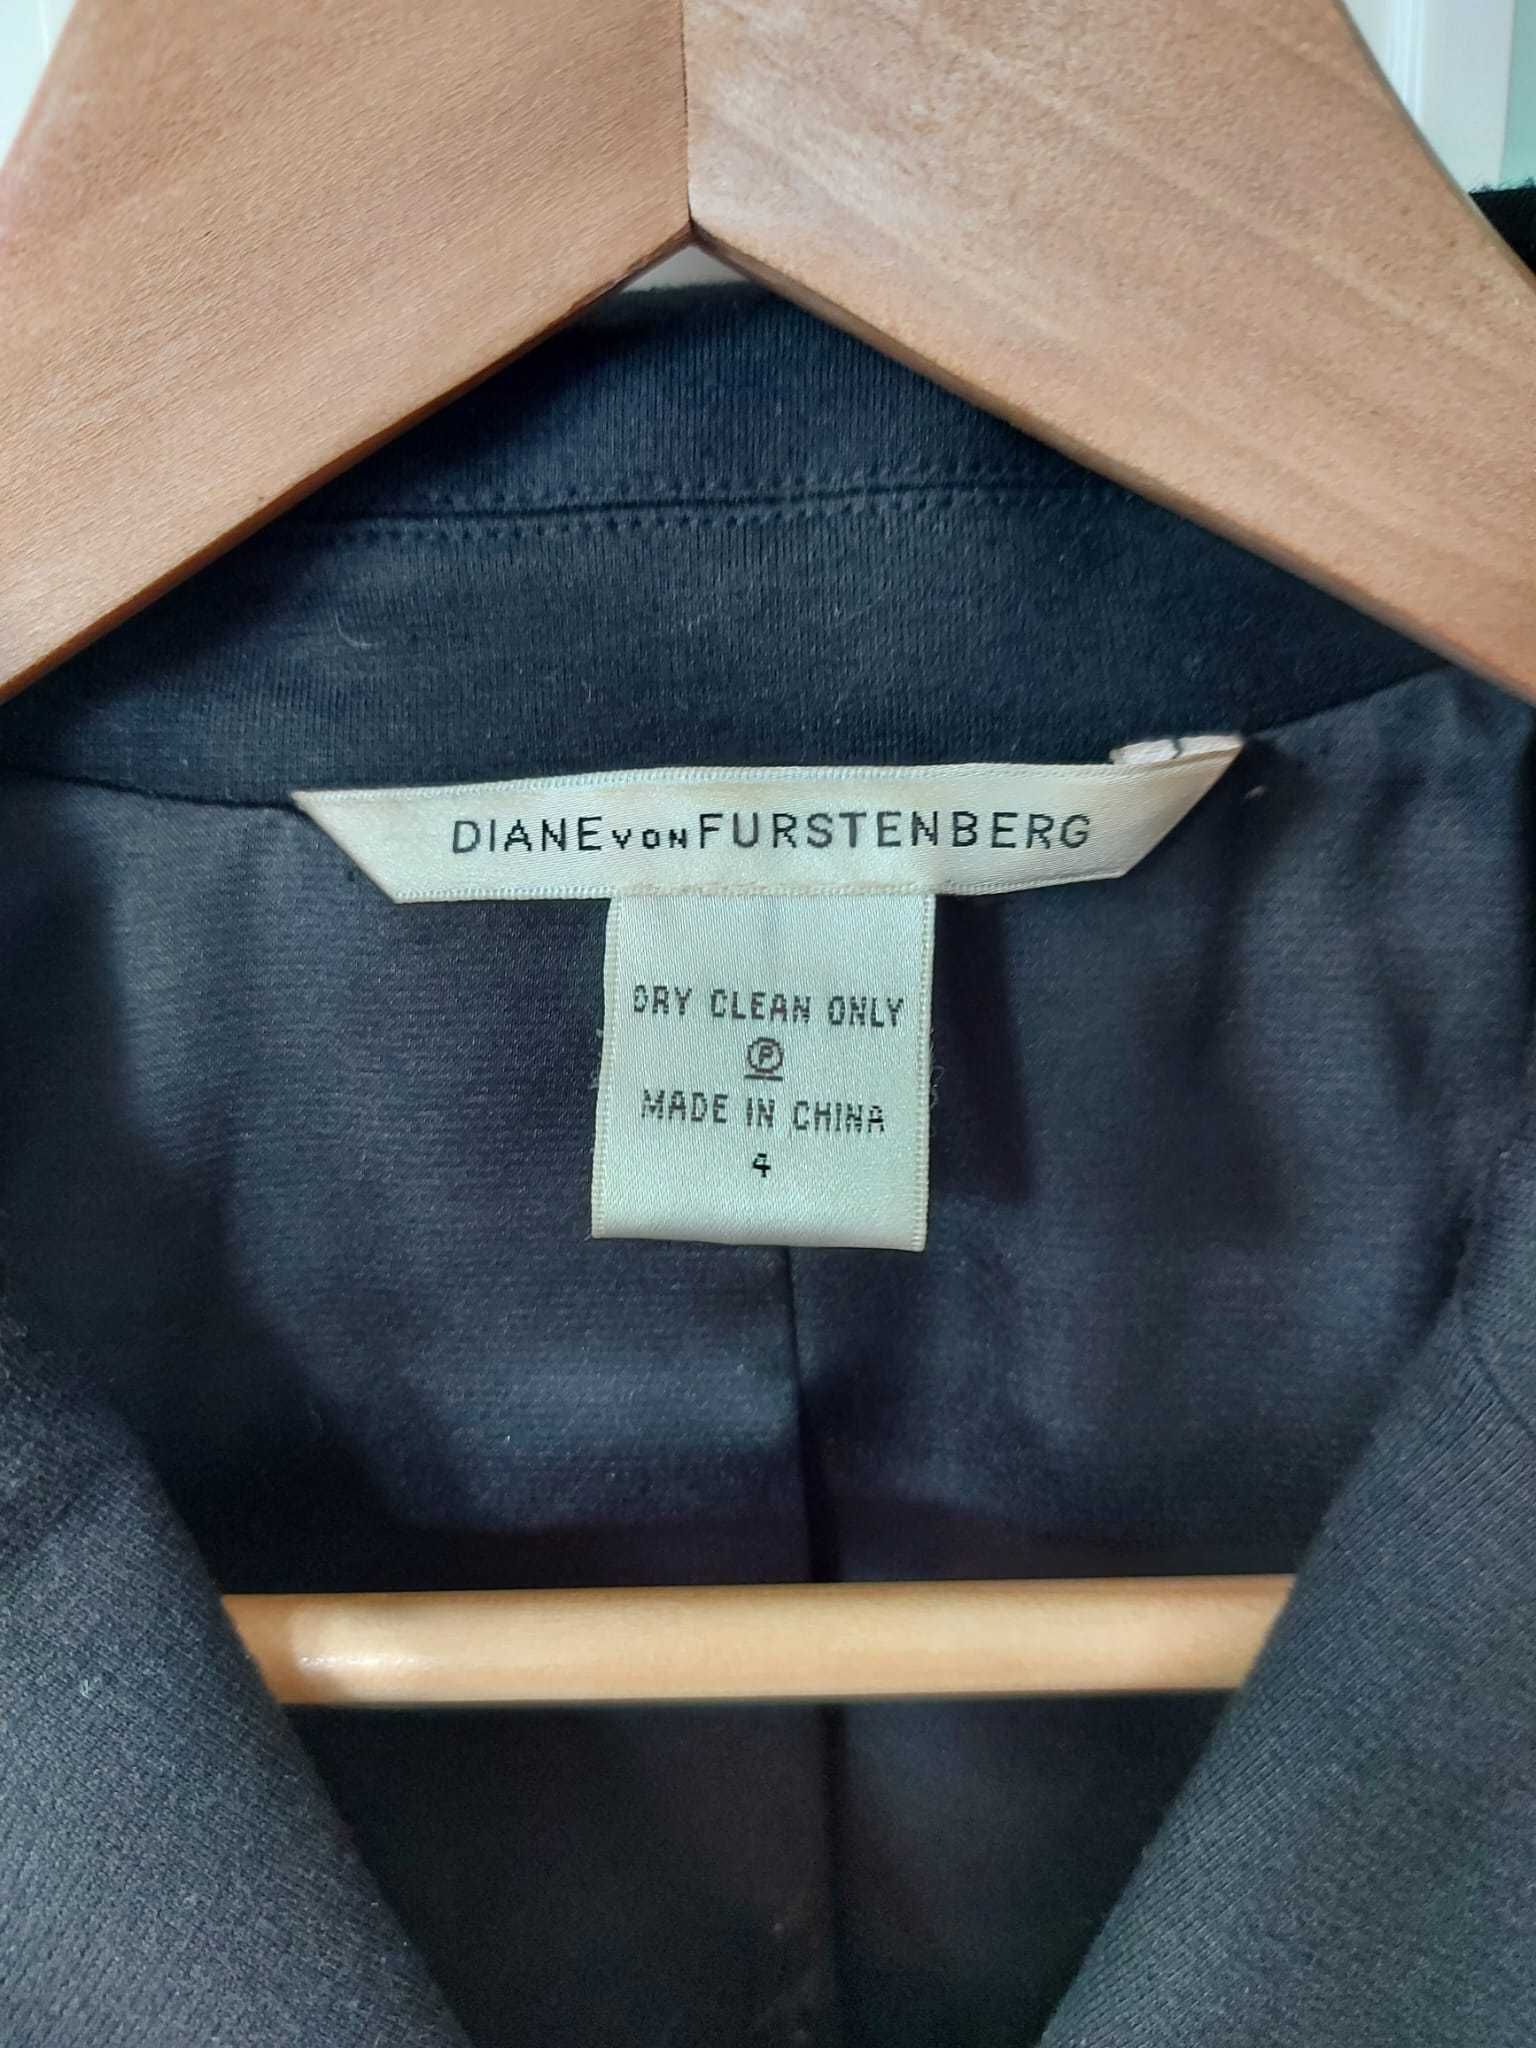 Blazer Diane von Furstenberg, preto, tamanho S